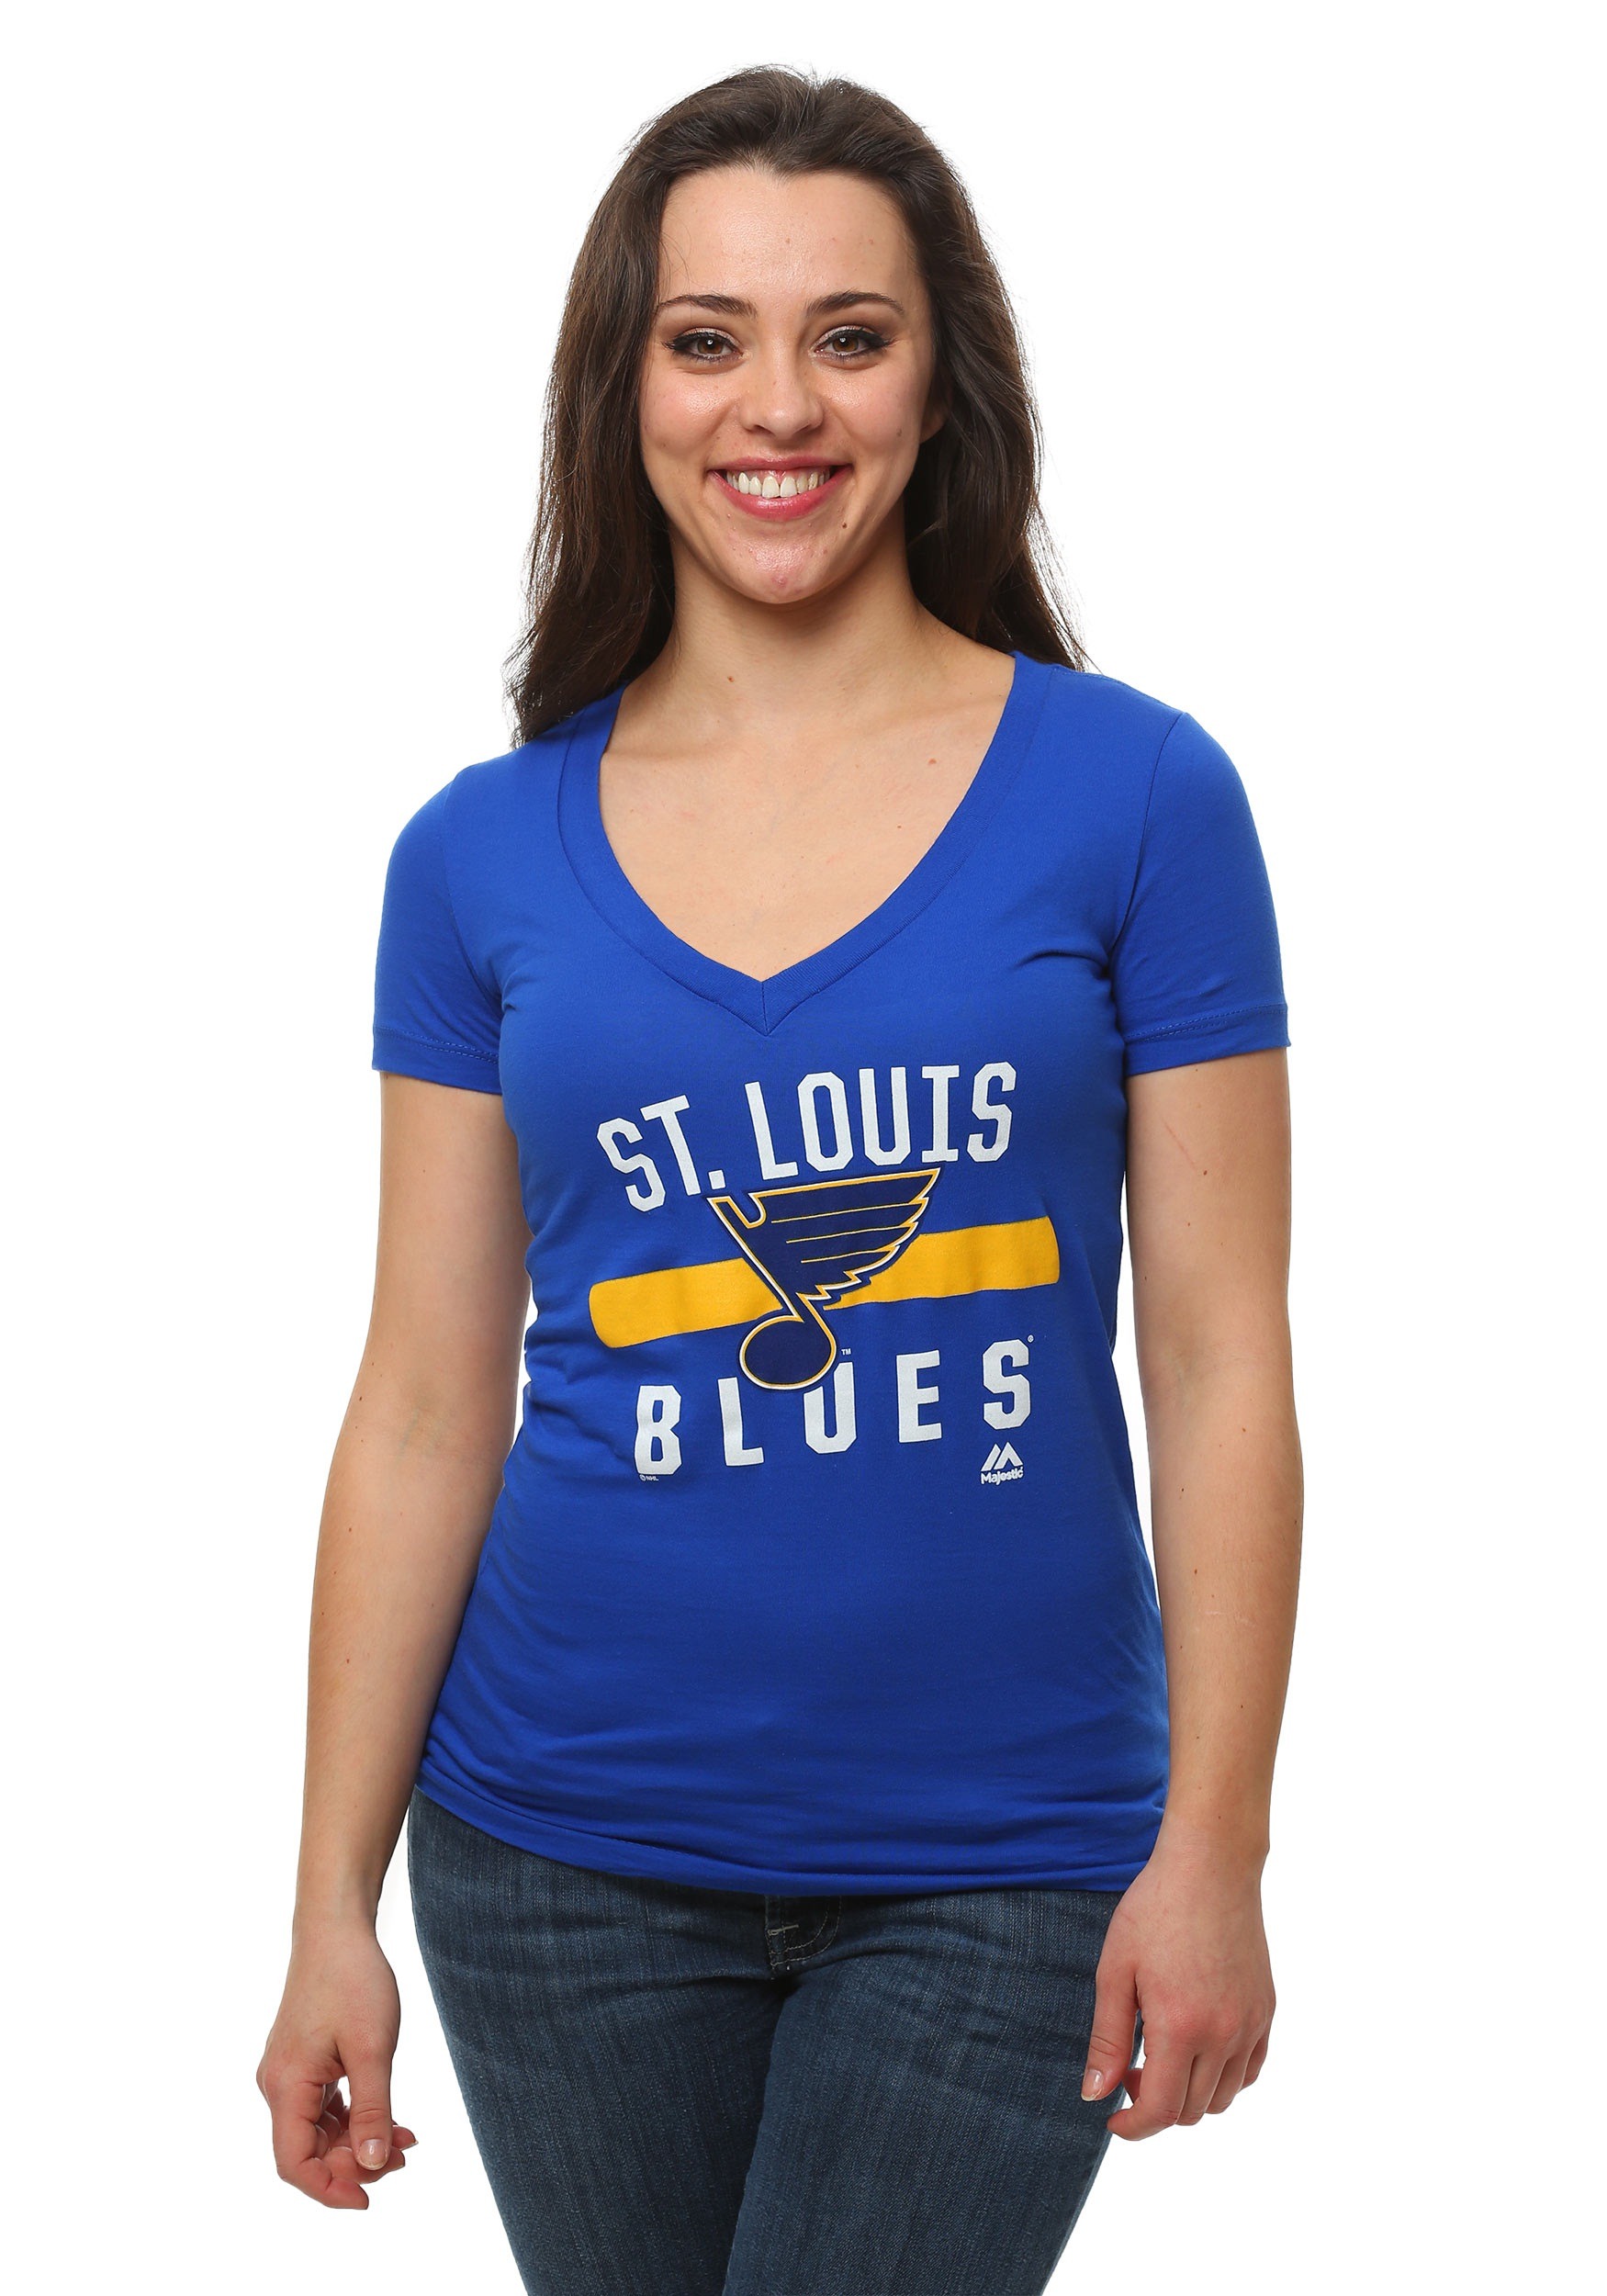 st louis blues women's shirts